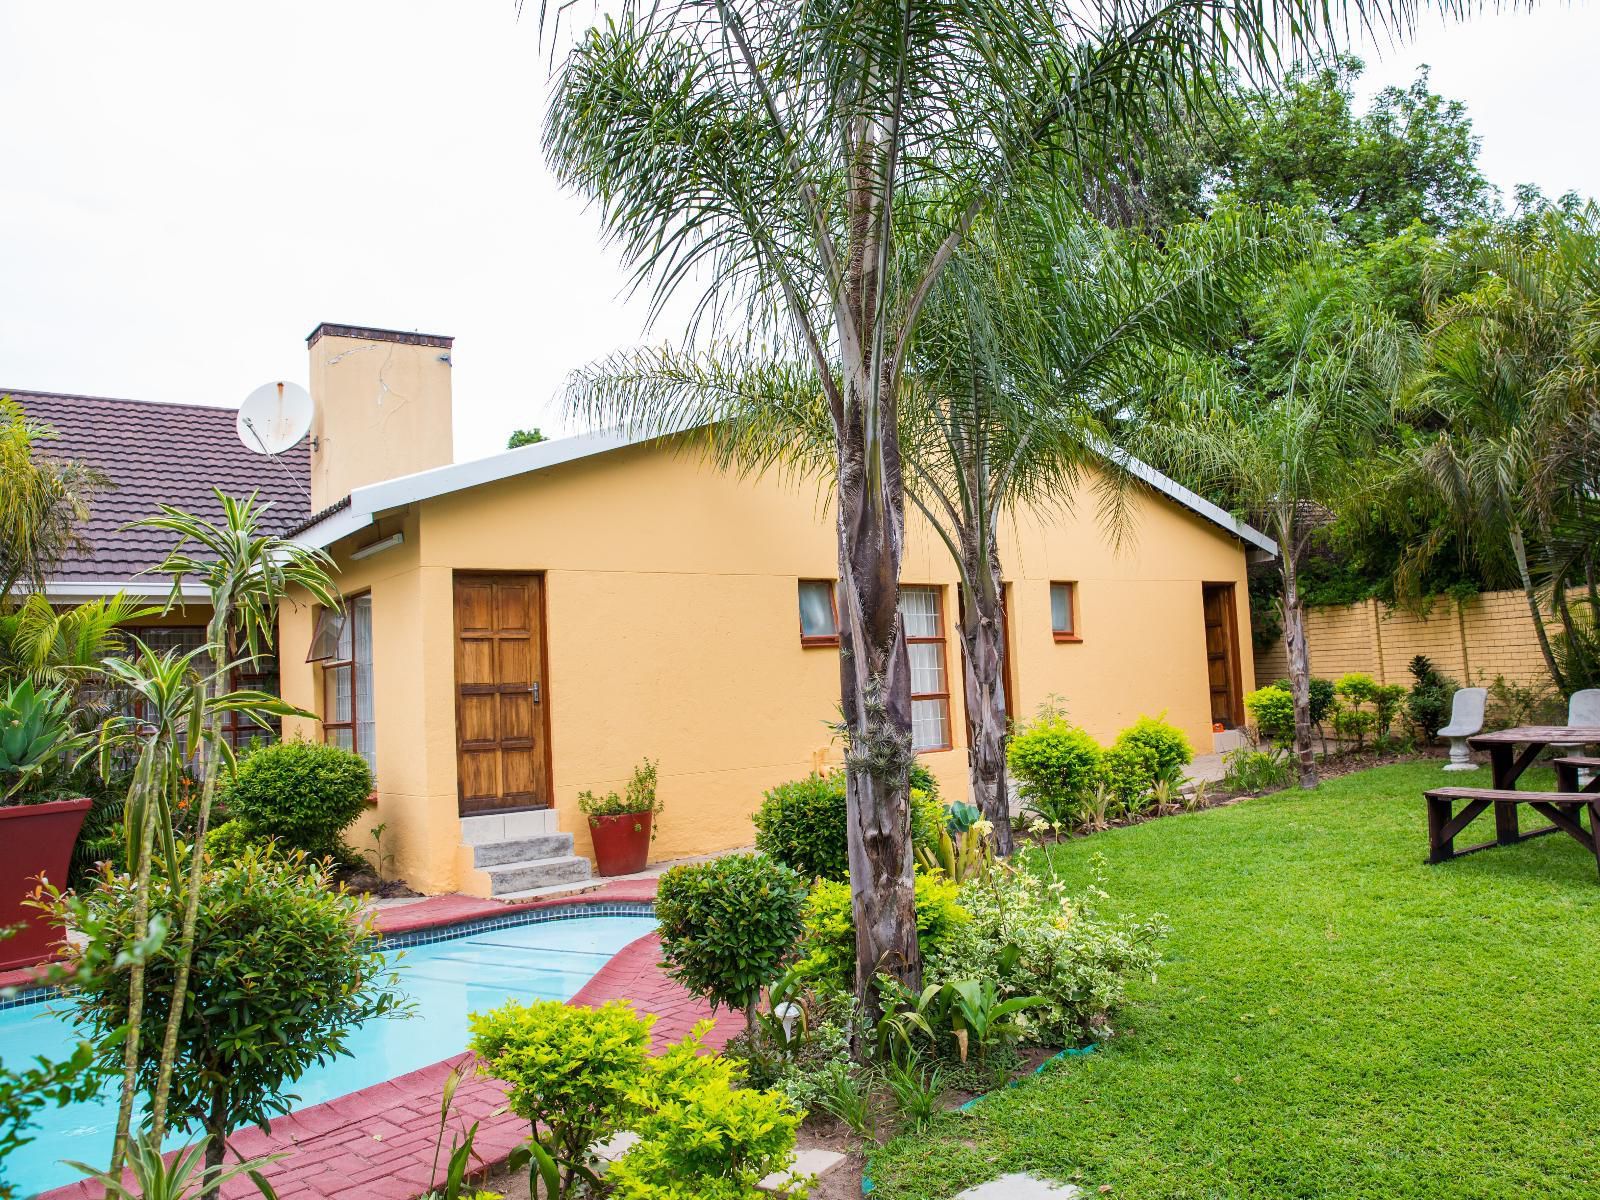 Ekhaya Nelspruit Guest House West Acres Nelspruit Mpumalanga South Africa House, Building, Architecture, Palm Tree, Plant, Nature, Wood